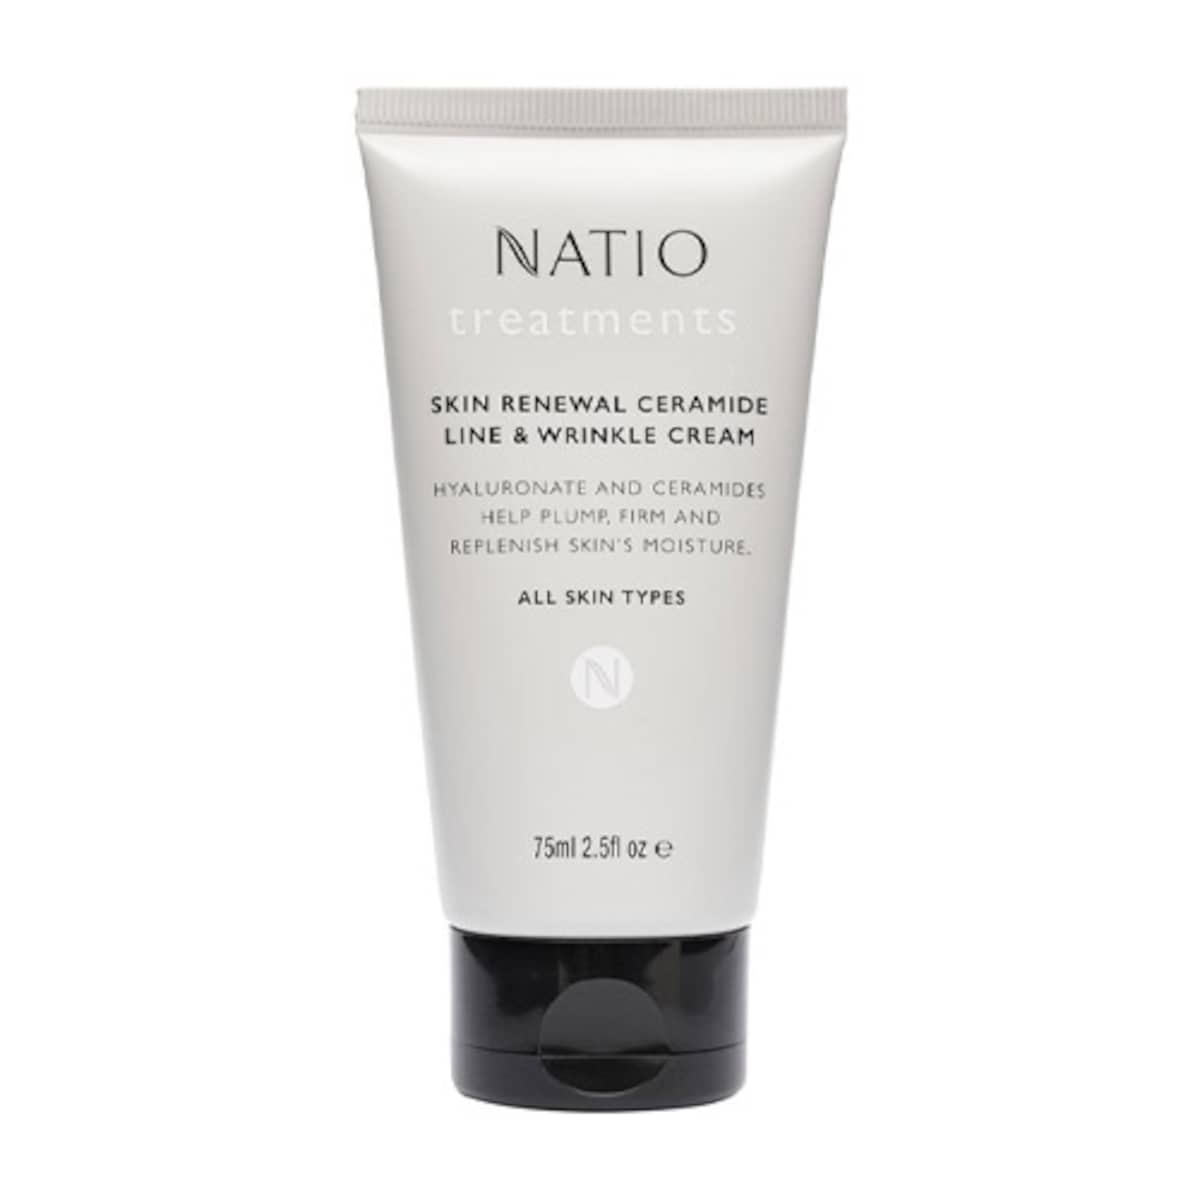 Natio Treatments Skin Renewal Ceramide Line & Wrinkle Cream 75ml